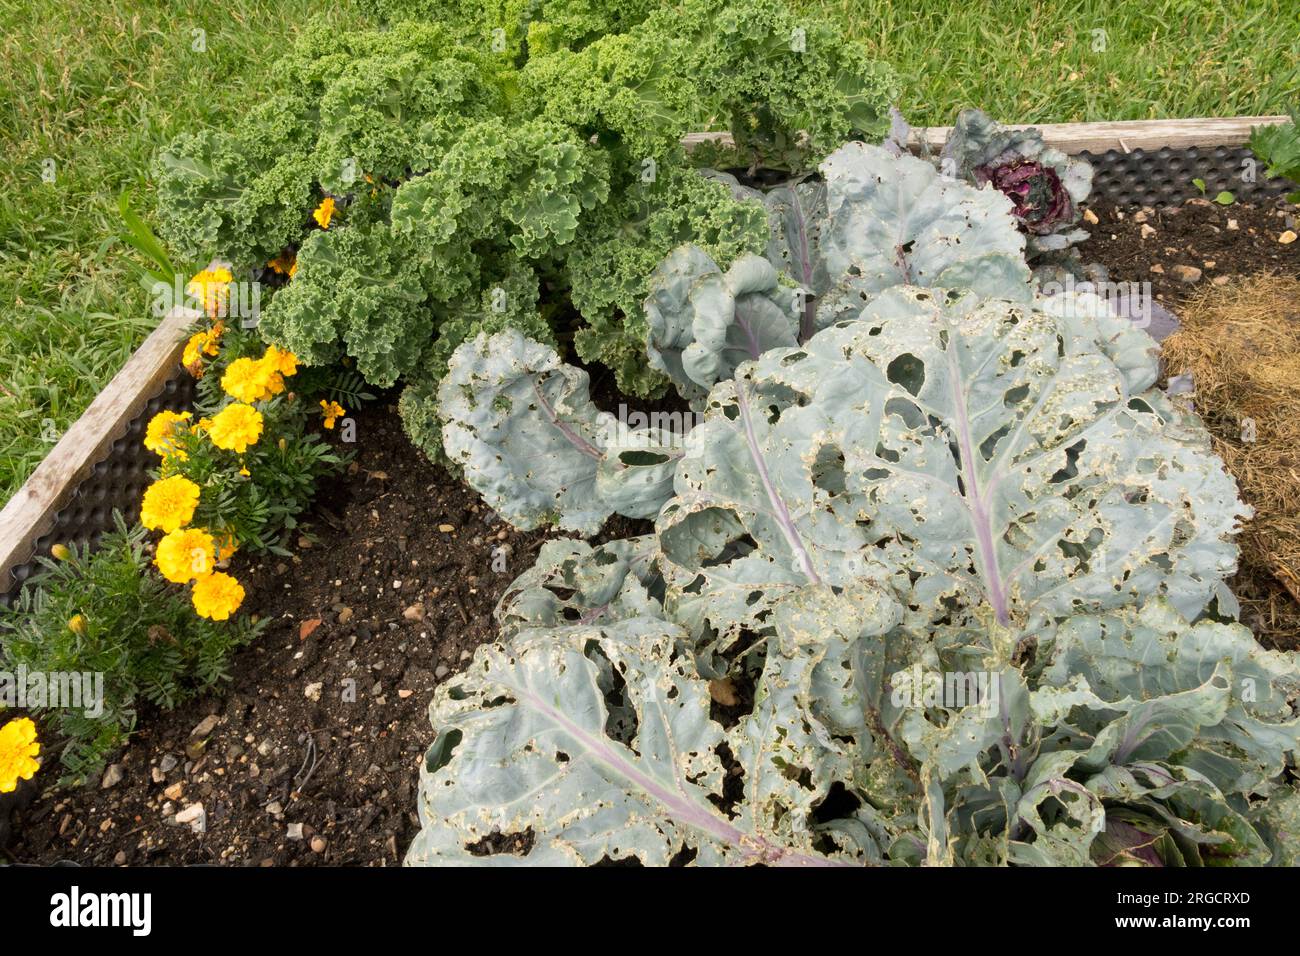 Brassica, Leaf, Damaged, pests, Garden, Raised, Bed, Cabbage, leaves, Vegetable Stock Photo